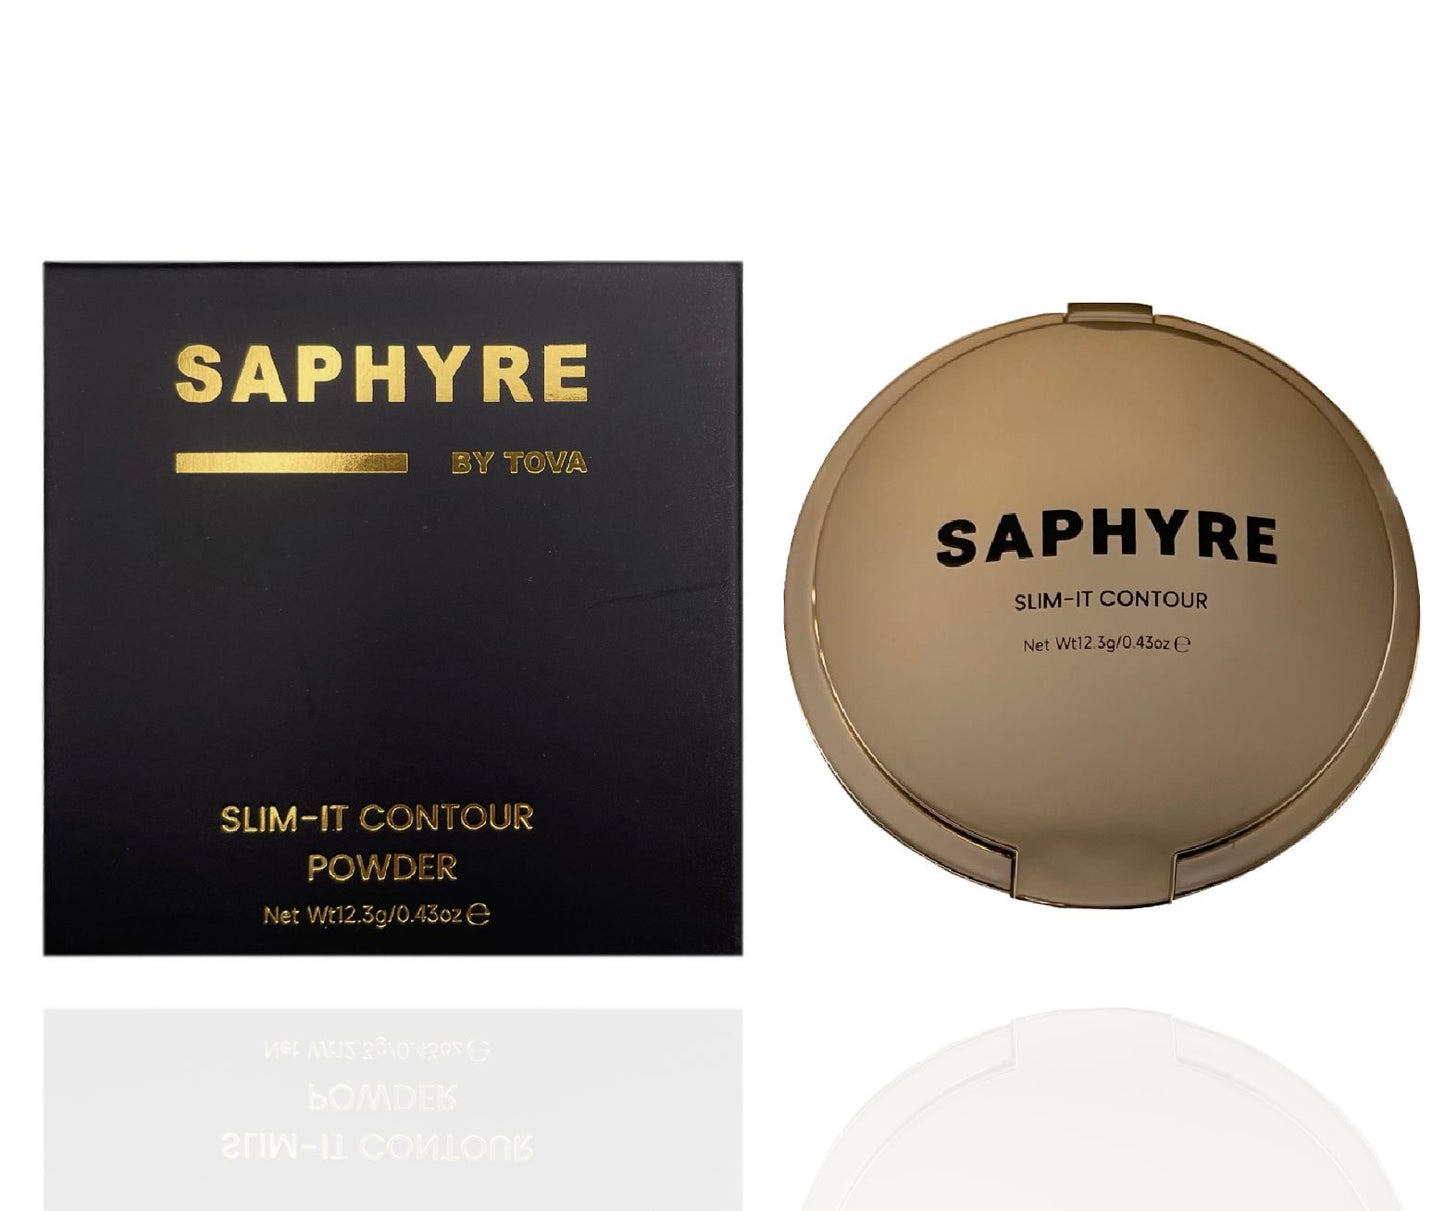 Saphyre by Tova Slim-it Contour Powder